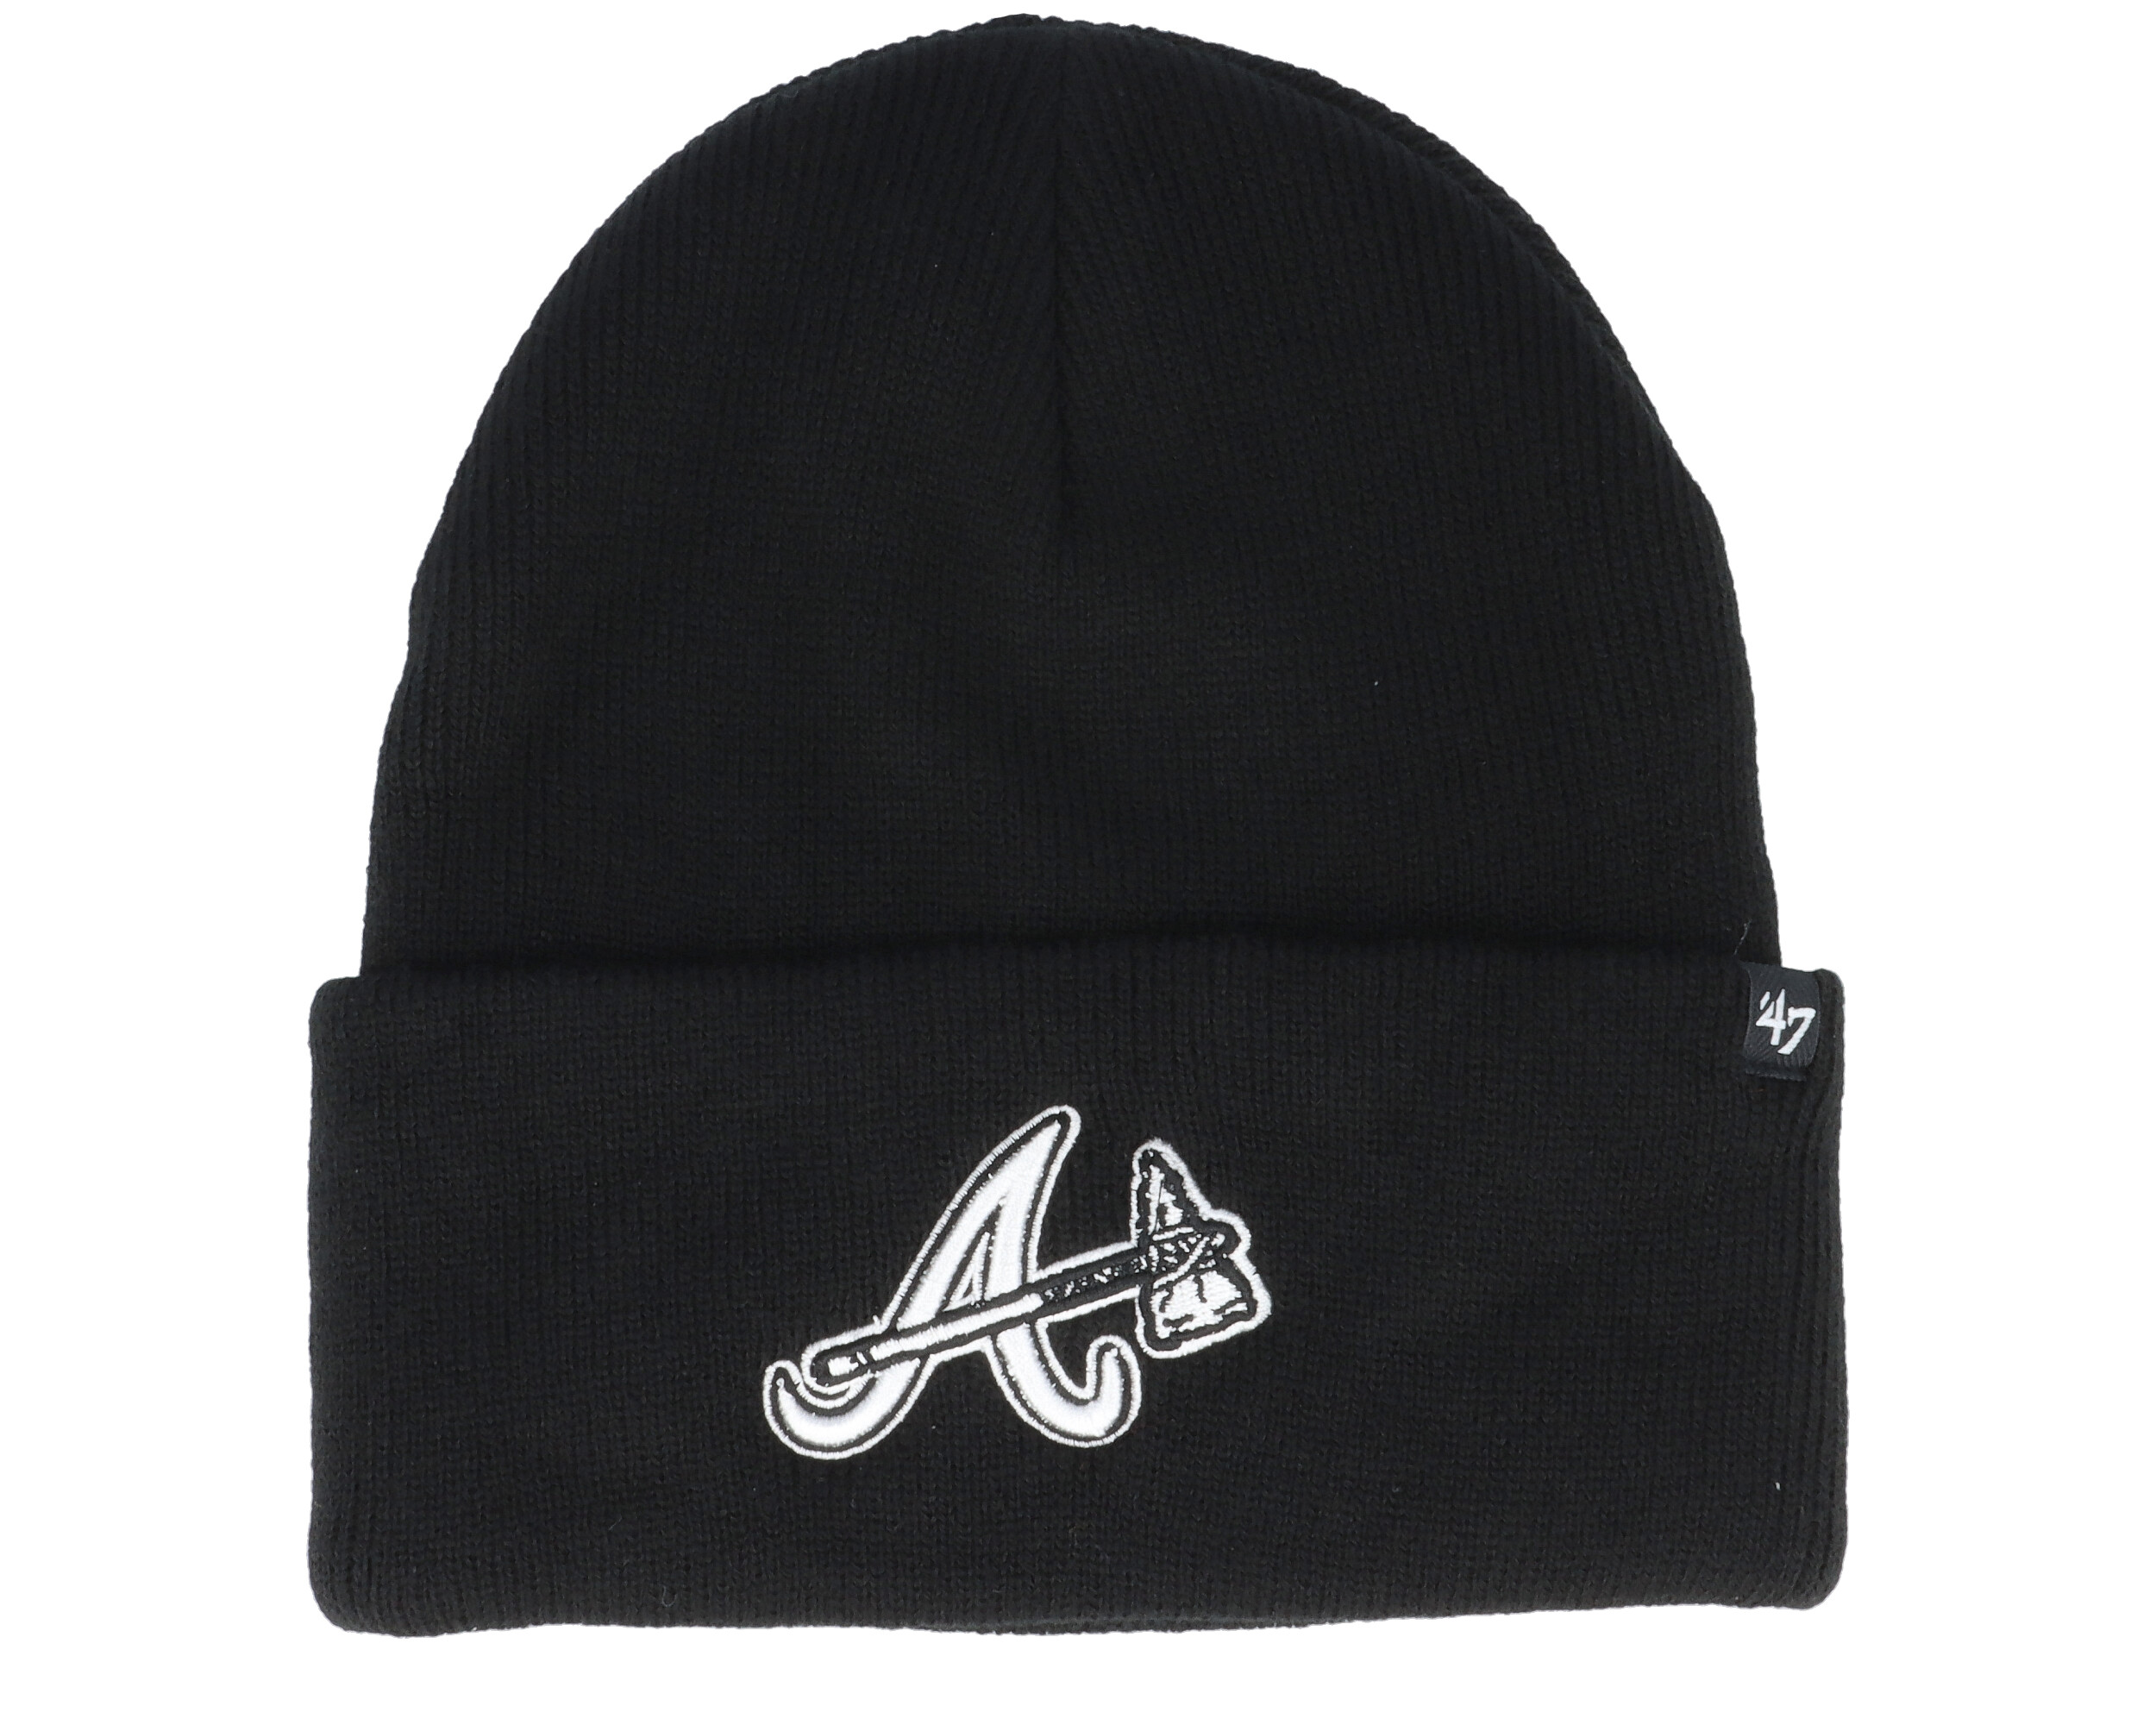 Atlanta Braves Beanies, Braves Knit Hats, Winter Hats